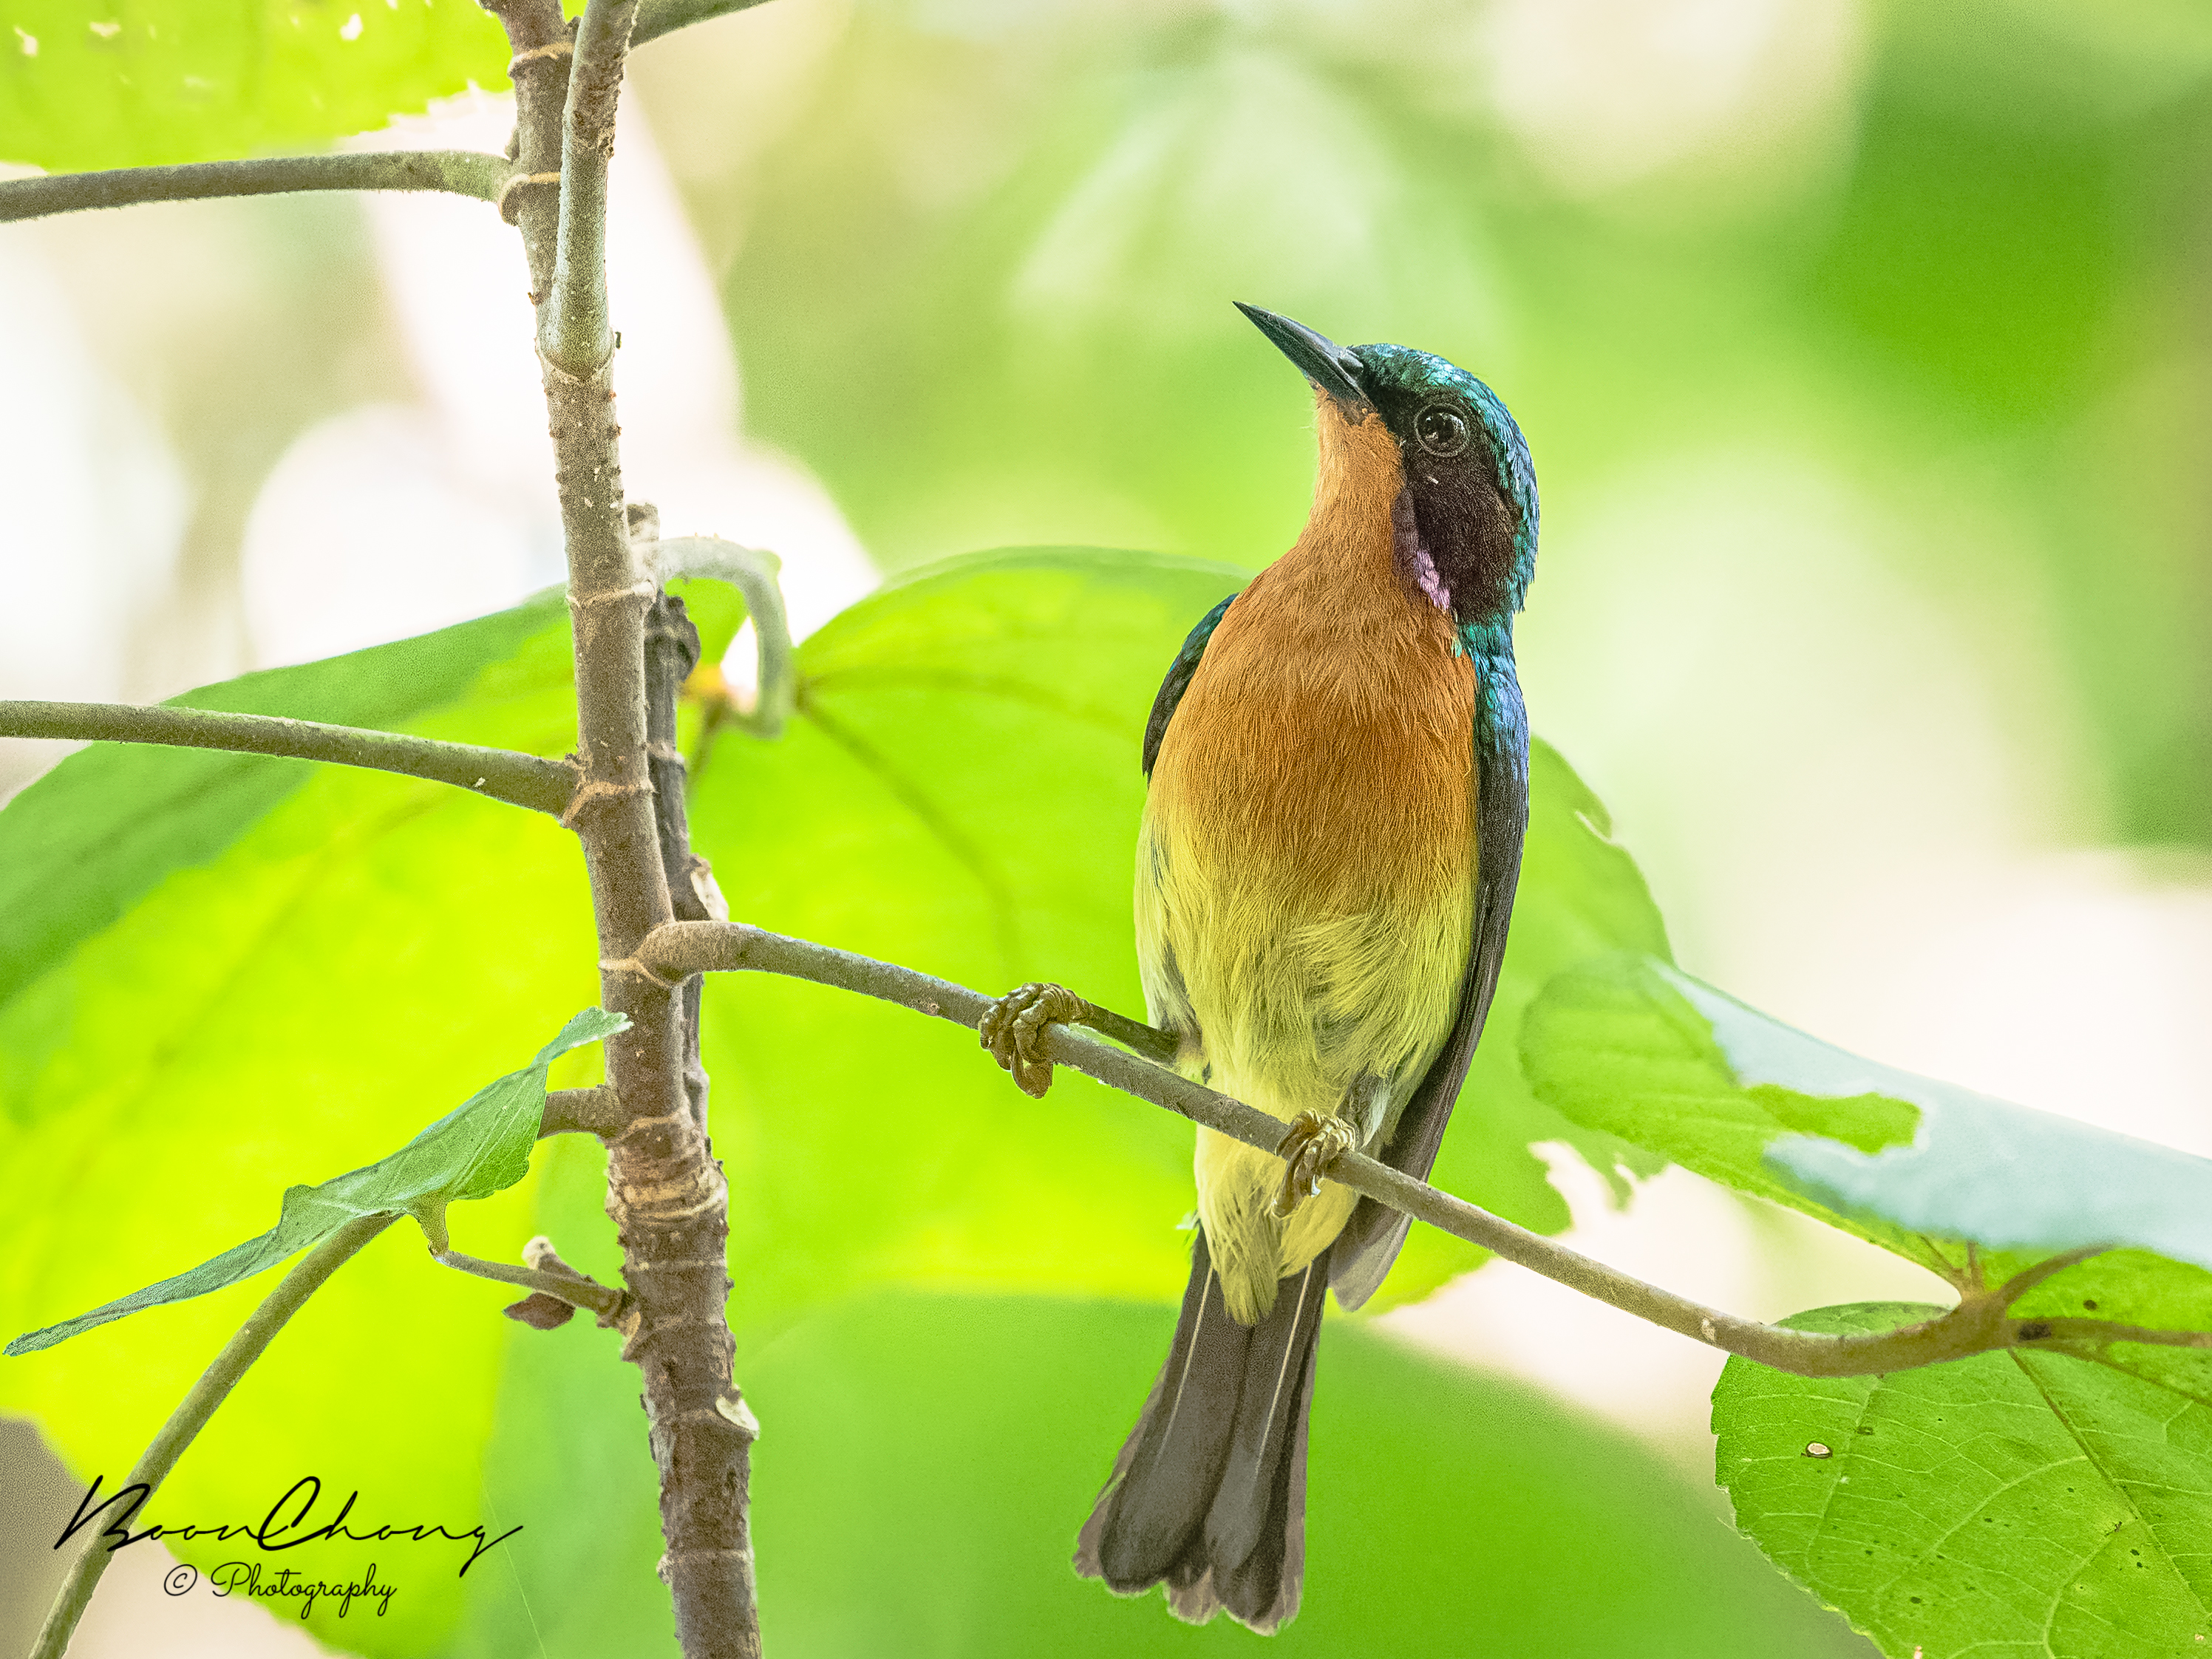 Ruby-cheeked Sunbird at Sungei Buloh Wetland Reserve on 28 May 2022. Photo credit: Chen Boon Chong